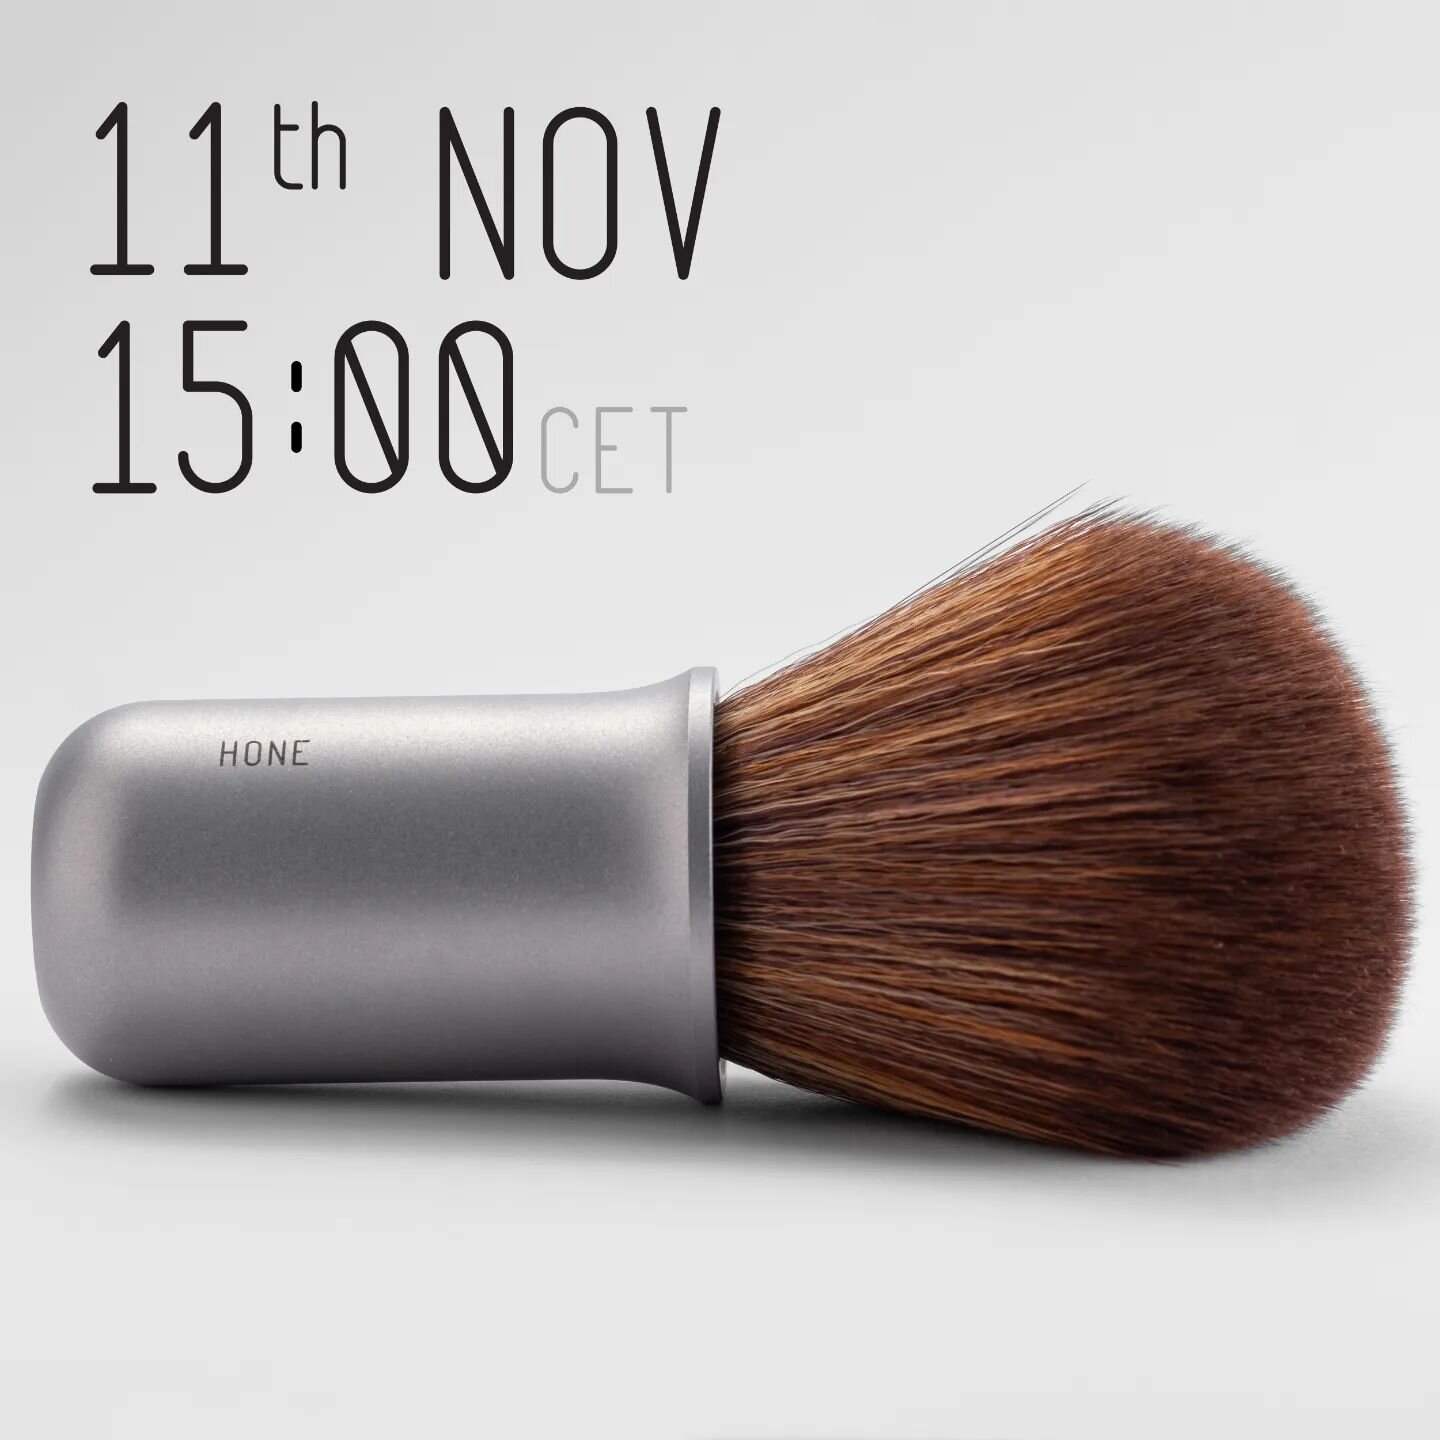 Launching 11th November, 15:00 CET. 
&bull;
#typeb #hone #shavingbrush #shaving #shavingbrushknots